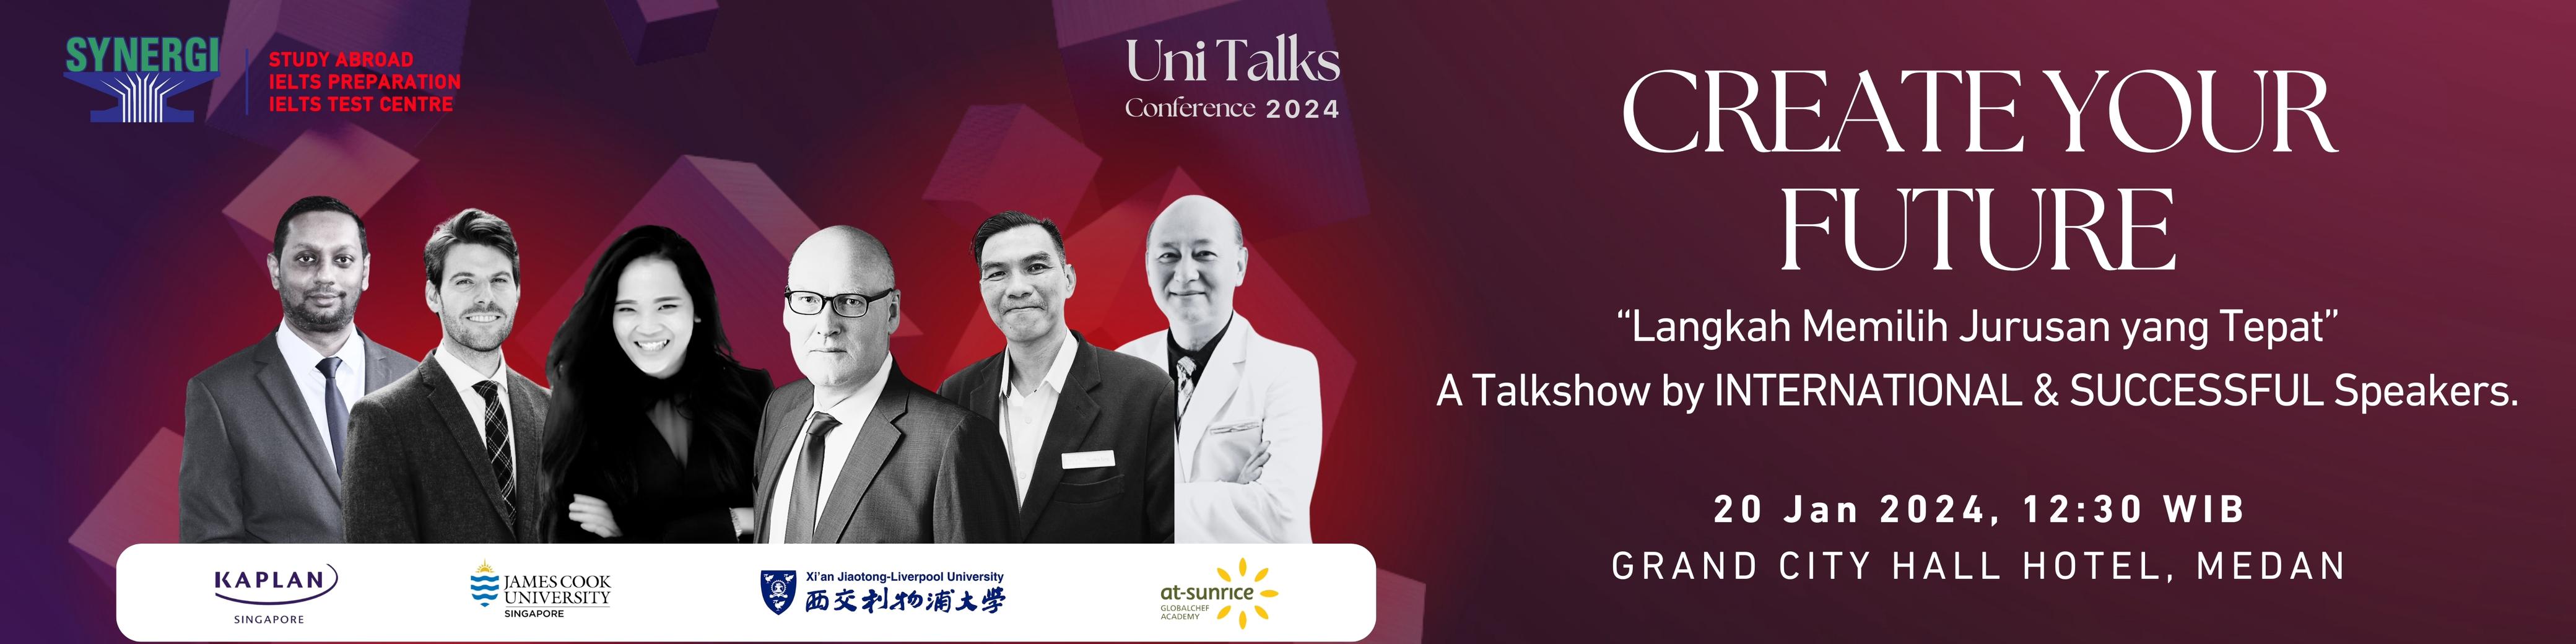 UniTalks Conference 2024: Temukan Jurusan Study Abroad yang TEPAT untuk Masa Depanmu